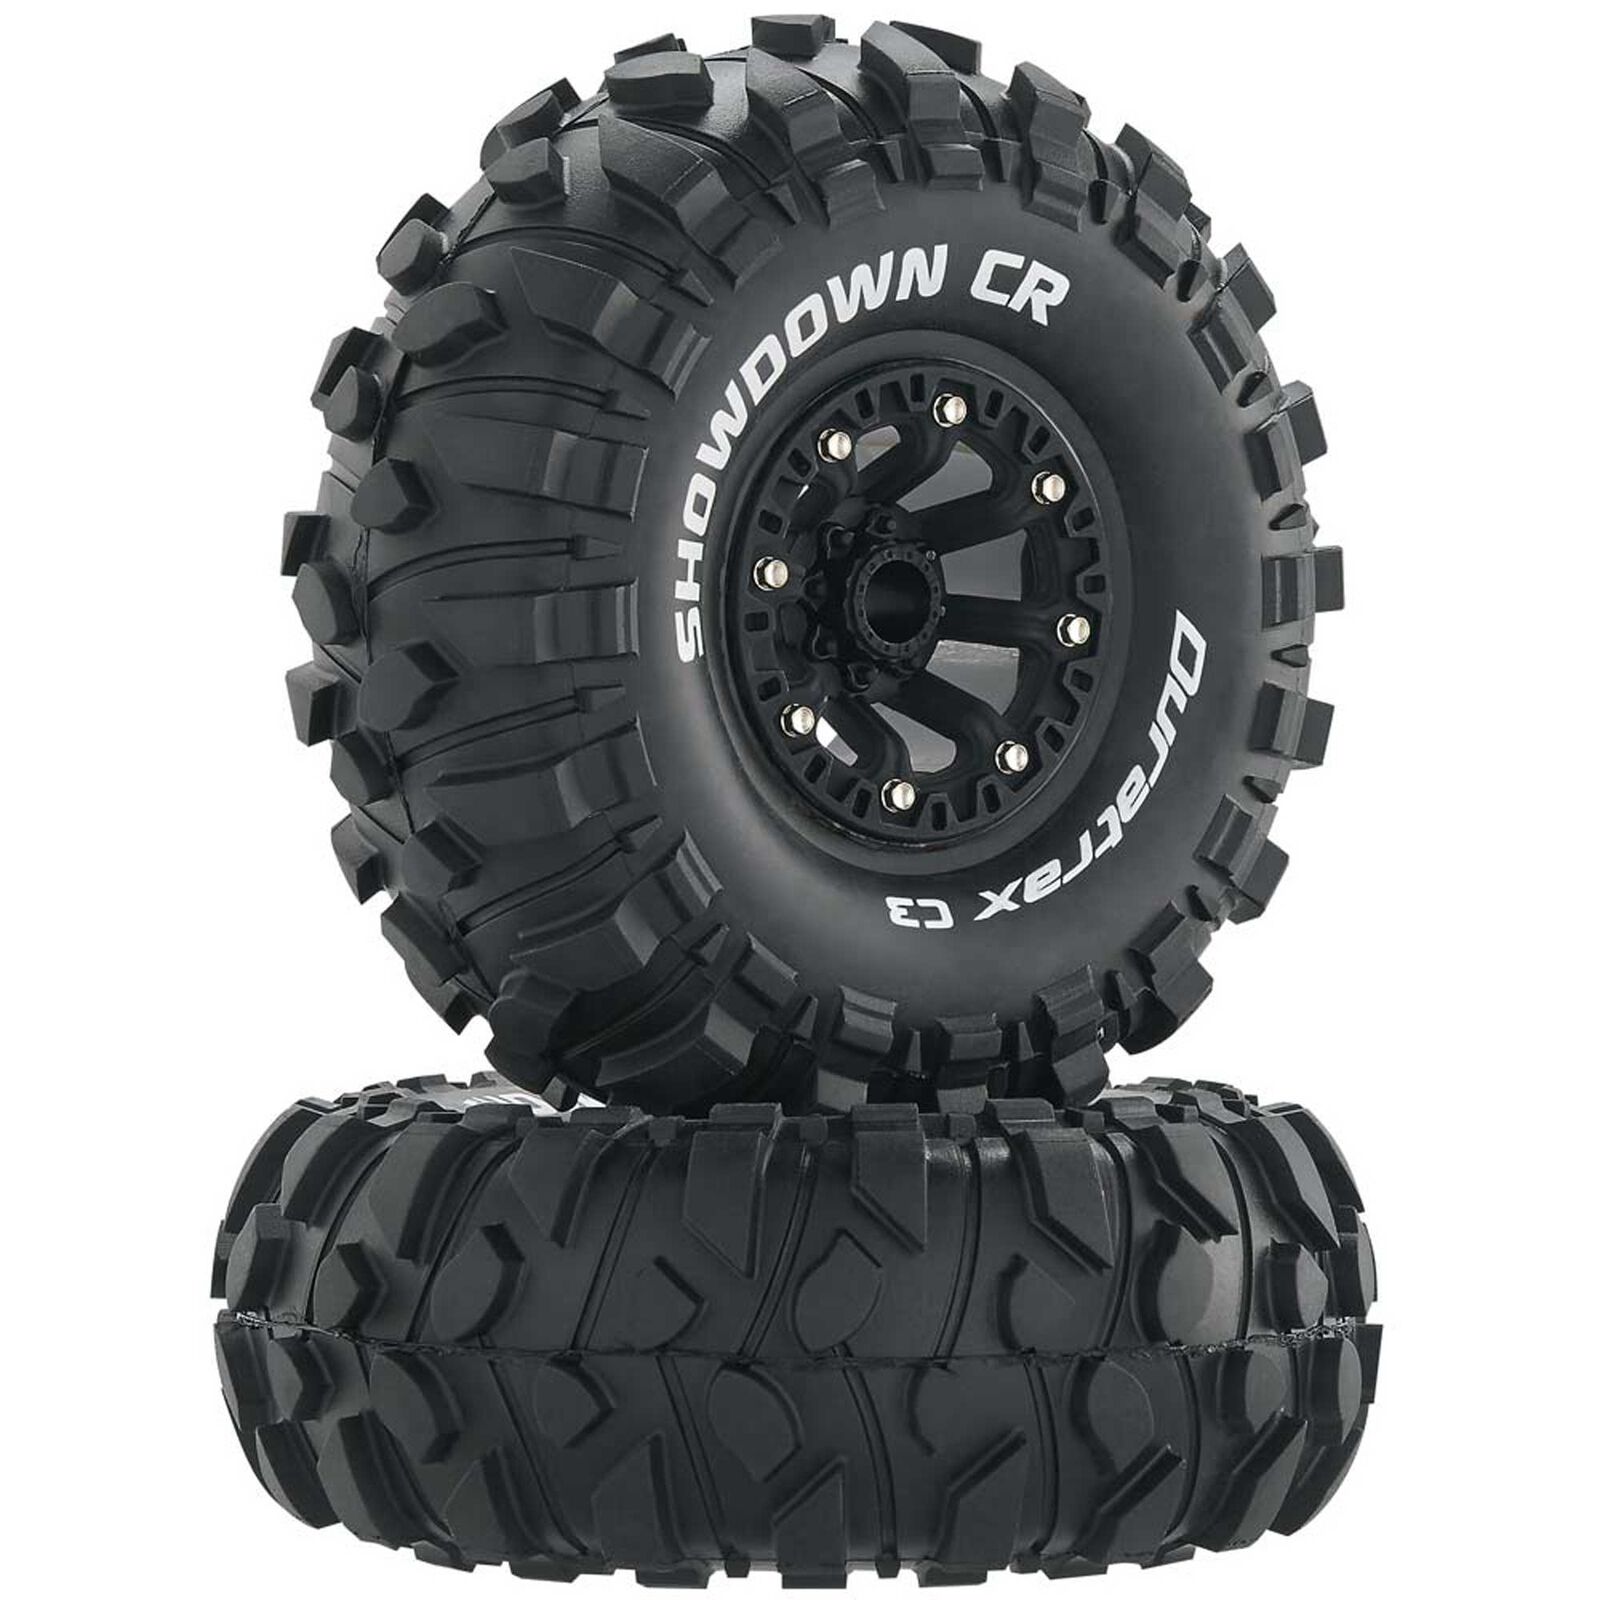 Showdown CR C3 Mounted 2.2" Crawler Tires, Black (2)